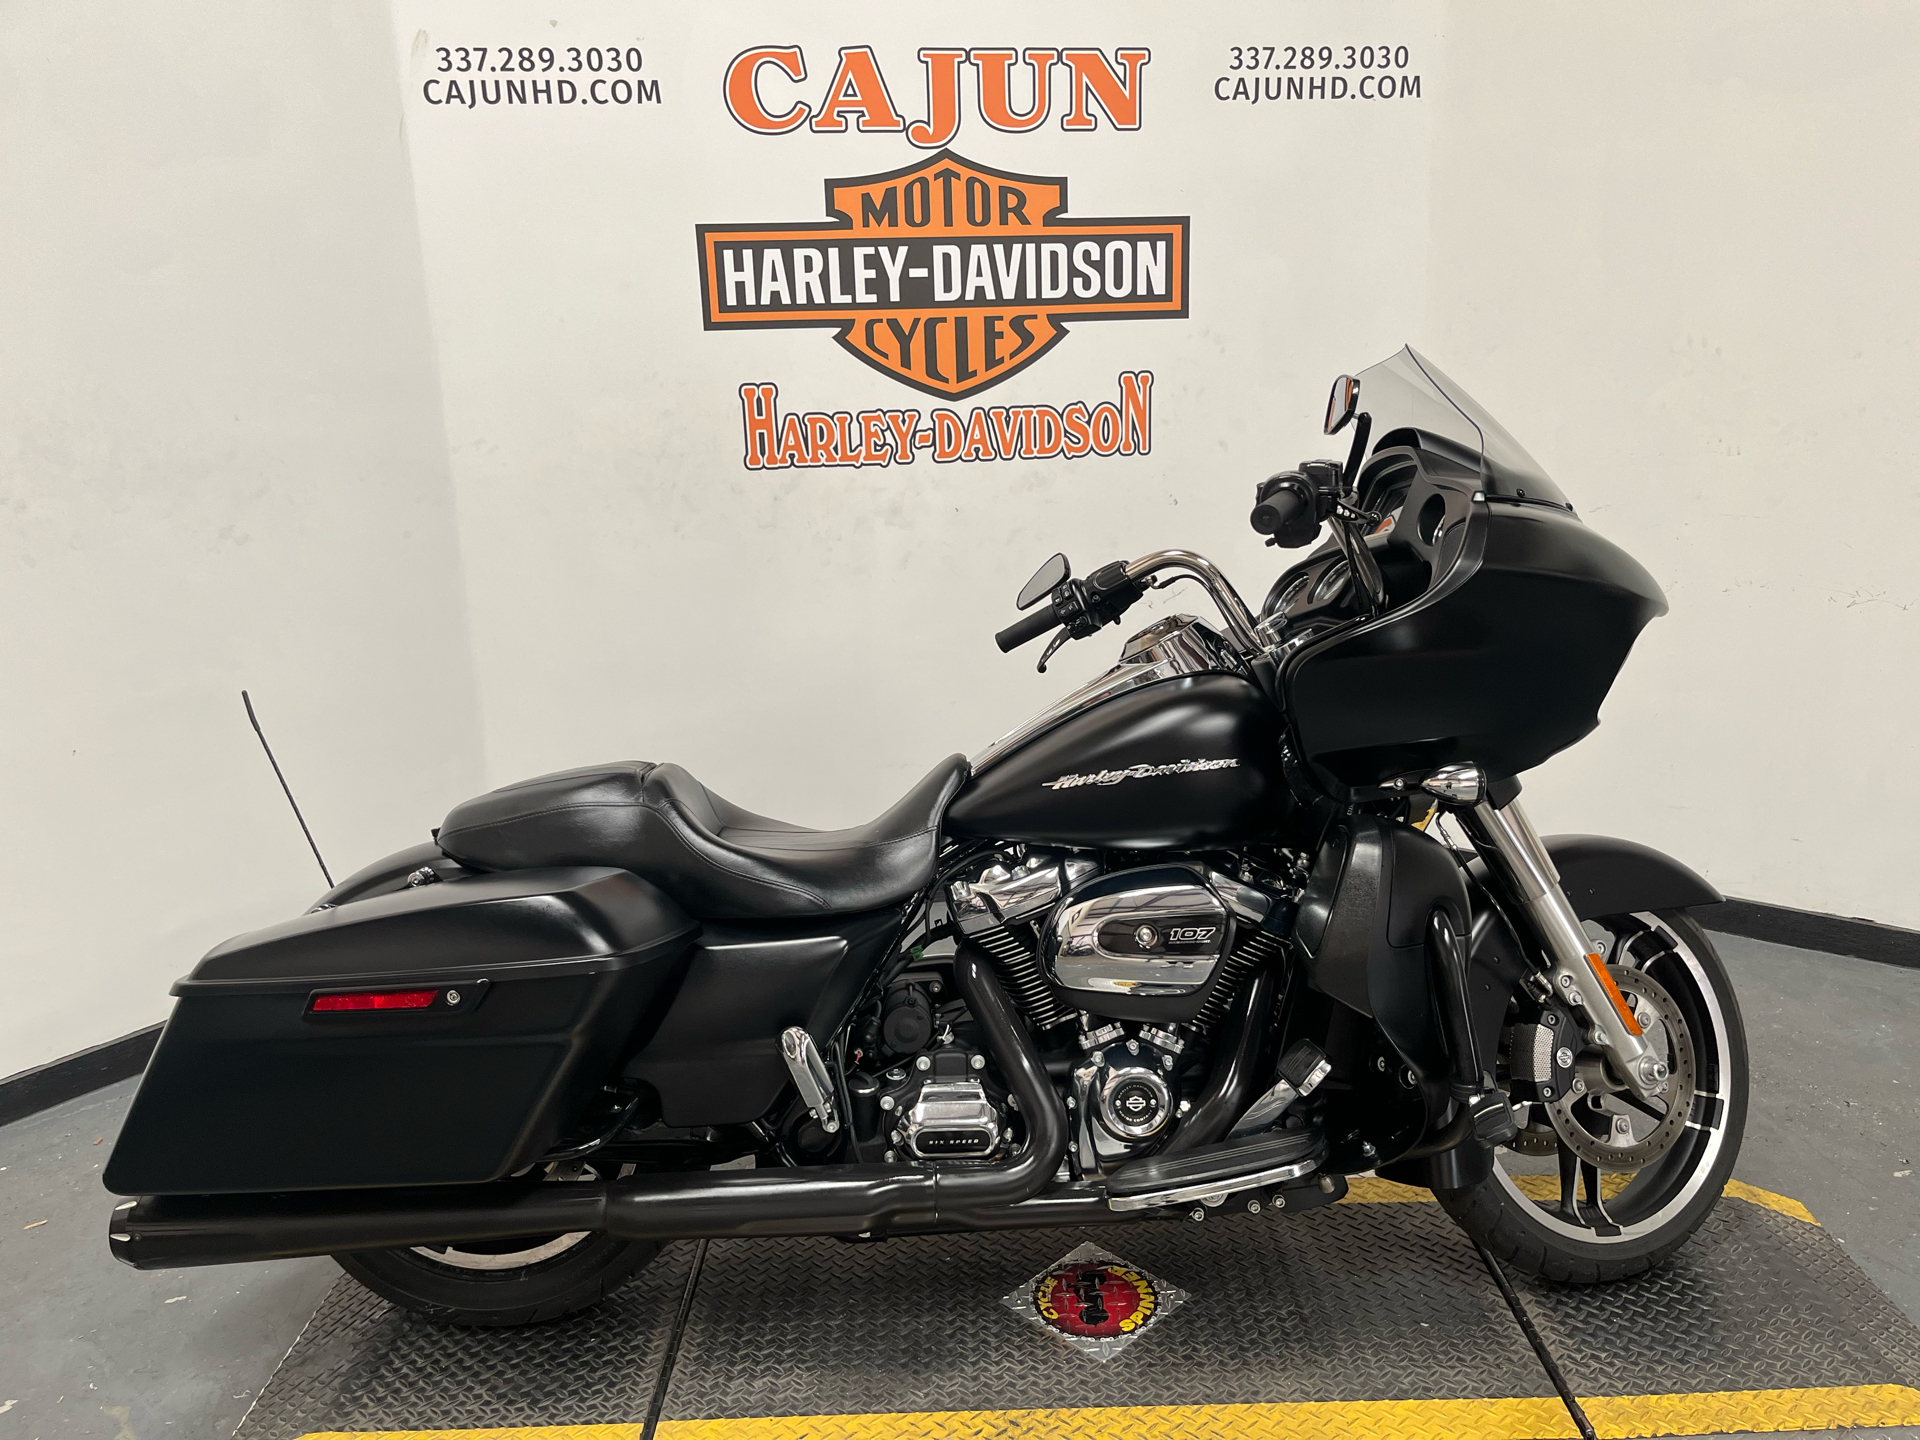 2017 Harley-Davidson Road Glide® Special in Scott, Louisiana - Photo 1